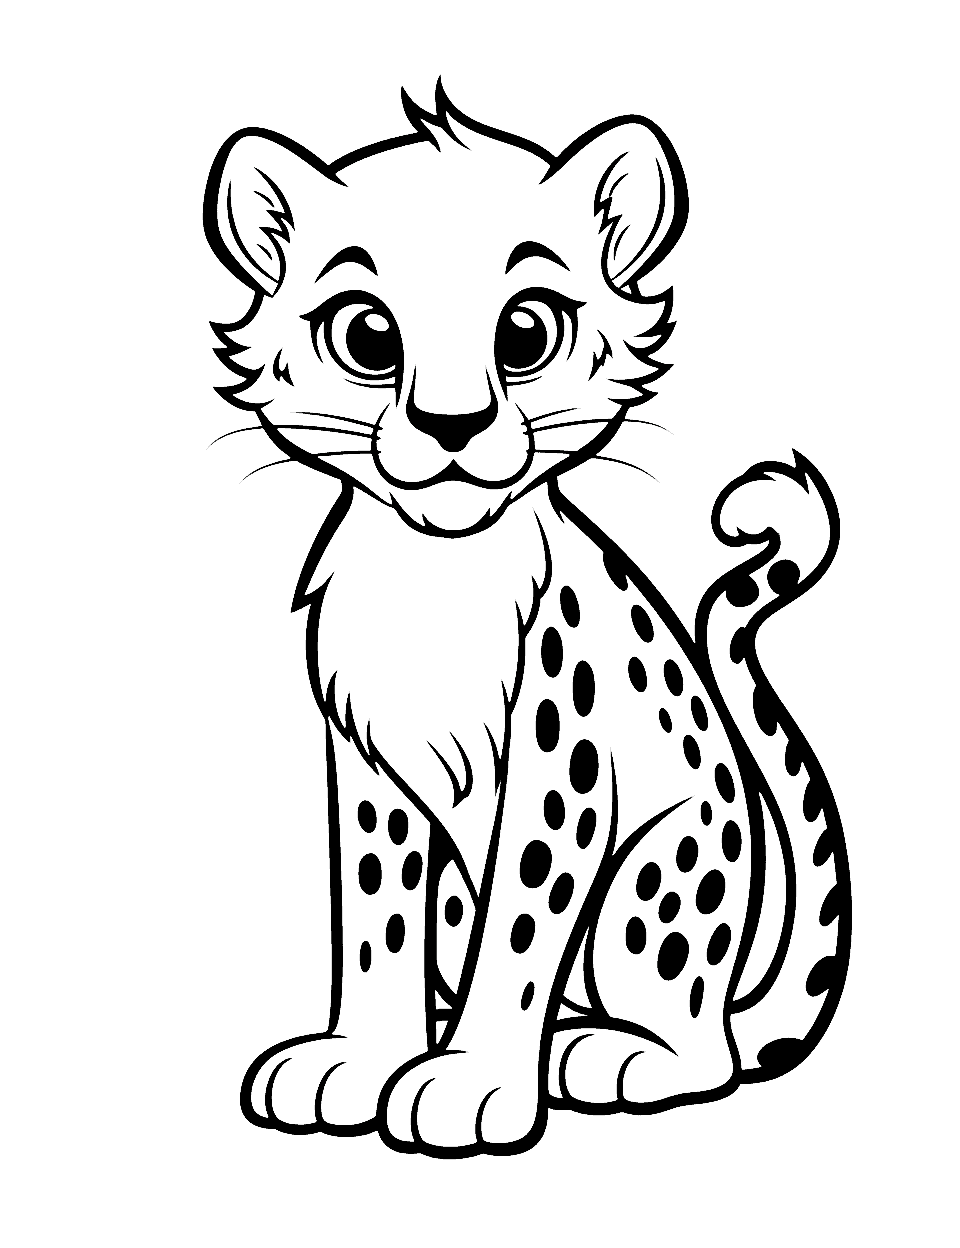 Cartoon Style Cheetah Coloring Page - A cheetah drawn in Disney cartoon style.